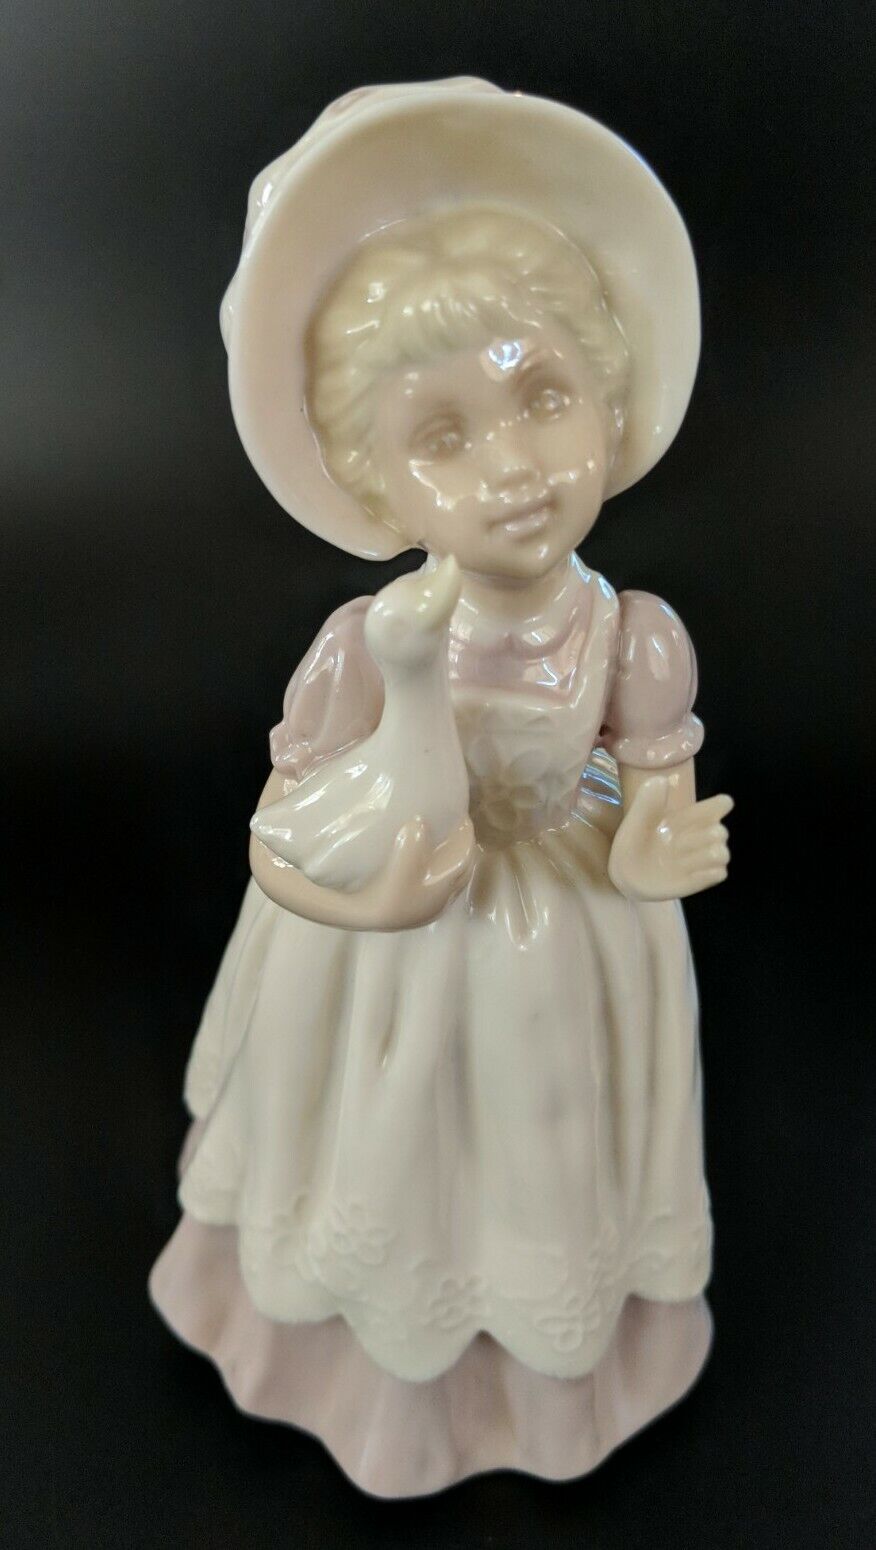 Figurine of Young Girl in Bonnet Holding Duck Goose - Vintage Porcelain Figure 